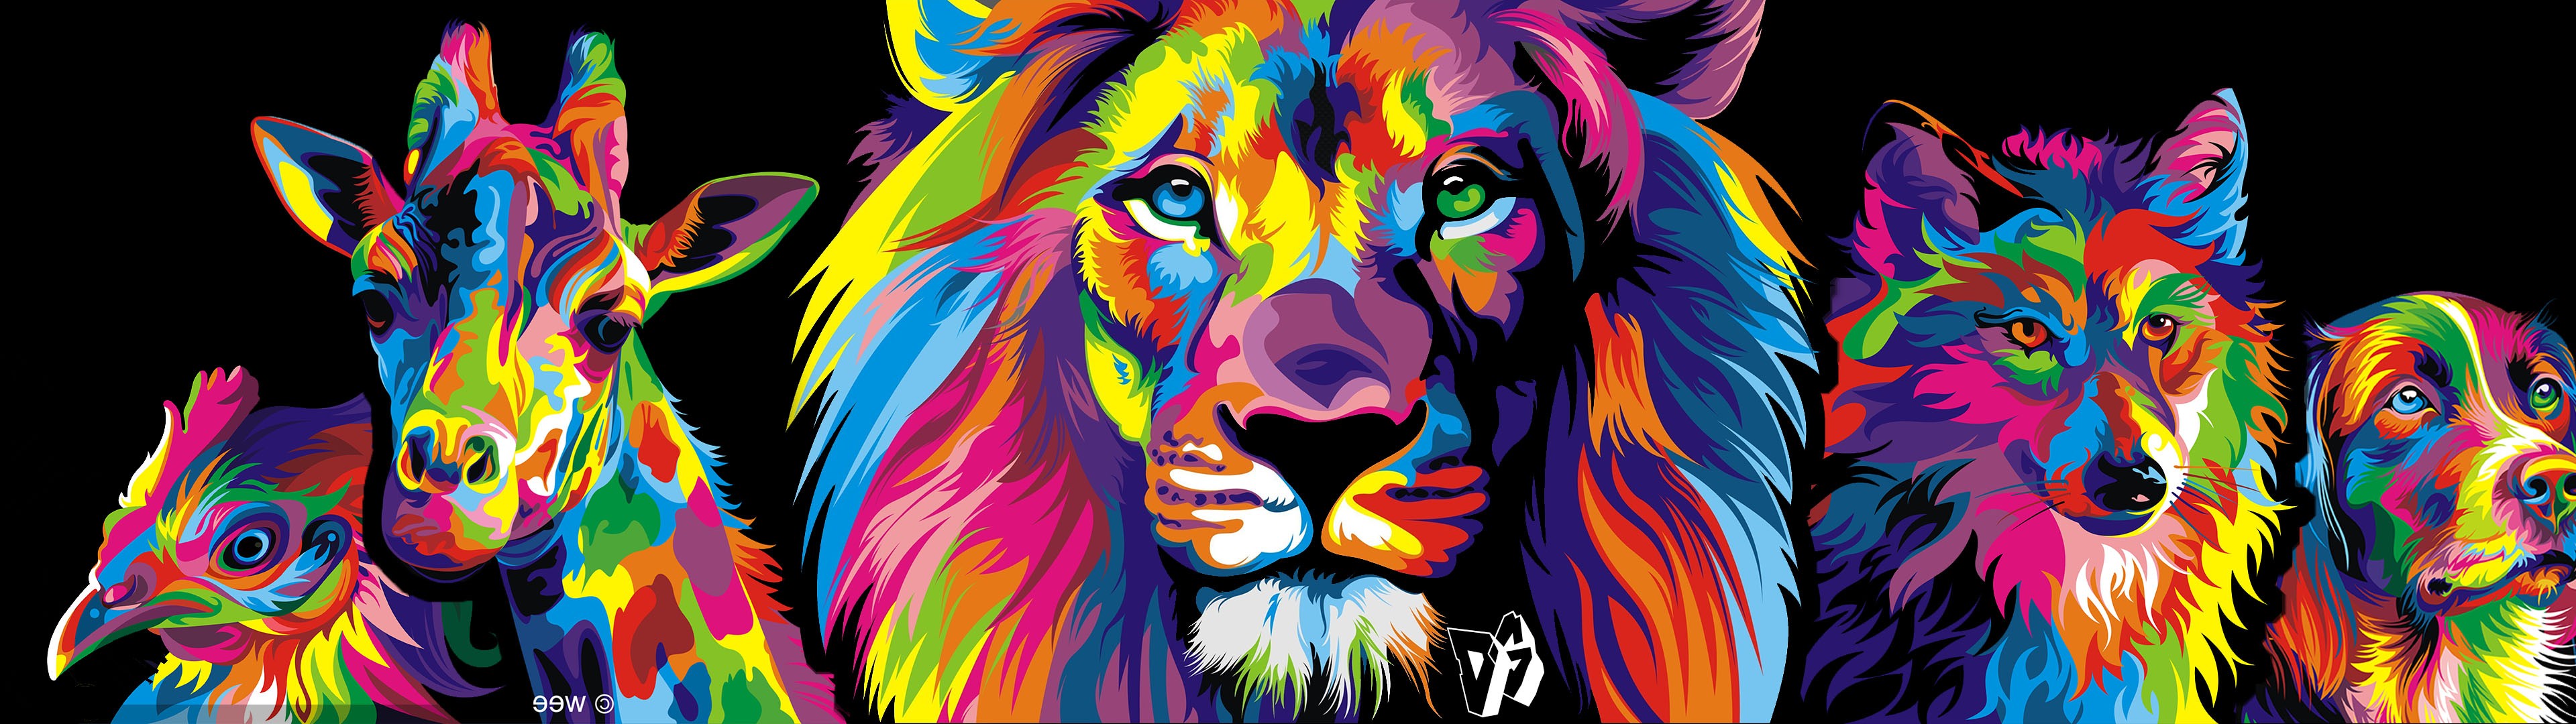 colorful lion wallpaper,lion,illustration,felidae,big cats,wildlife  (#627537) - WallpaperUse